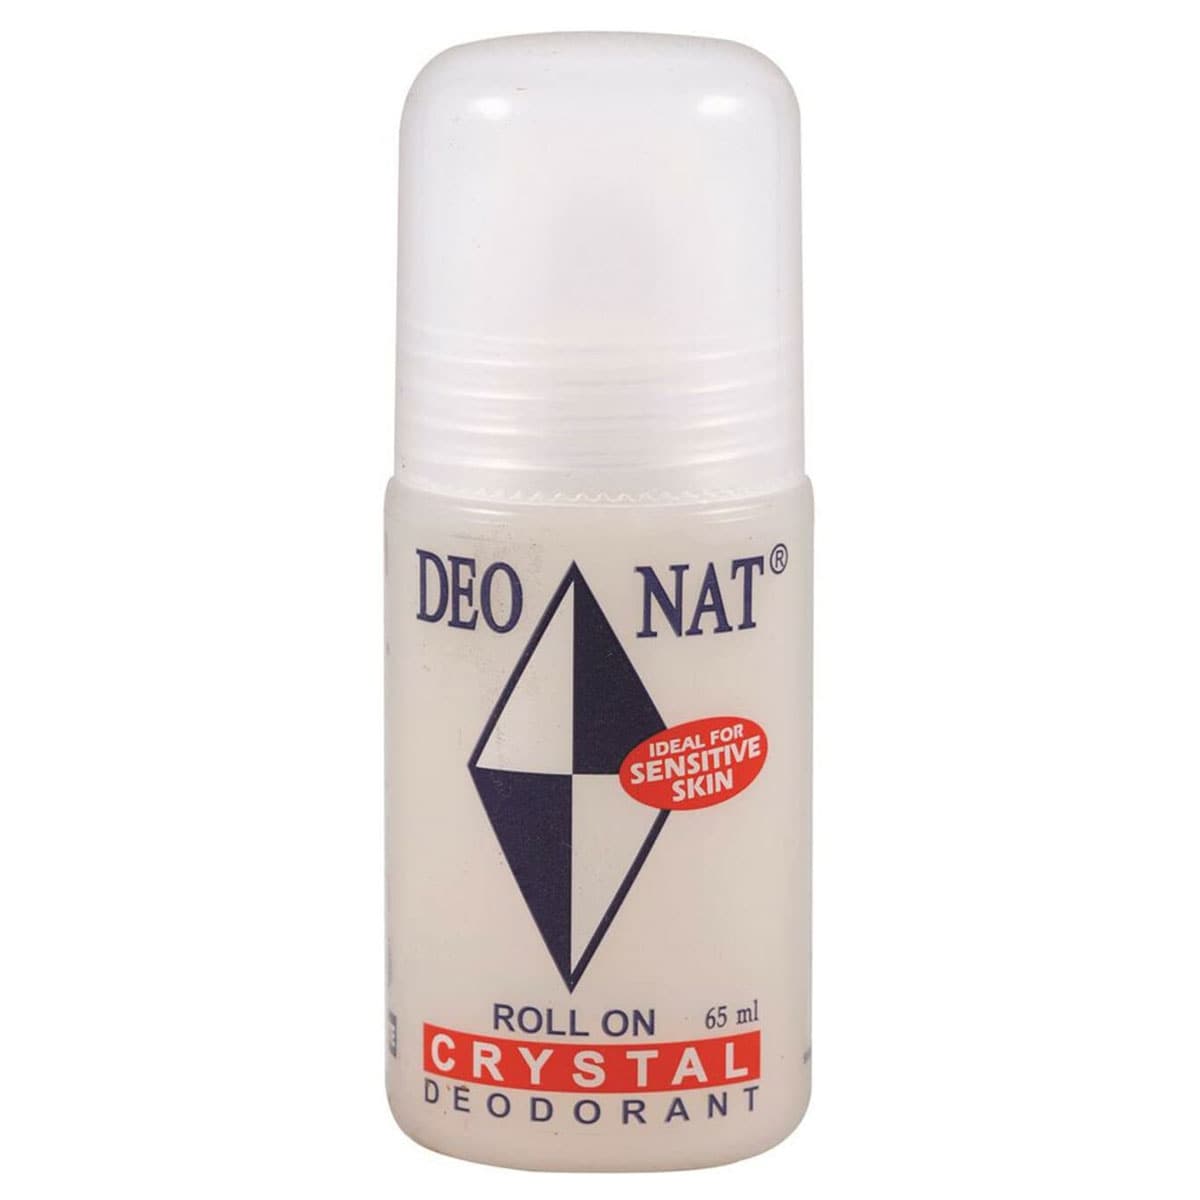 Deonat Natural Crystal Deodorant Roll On 65ml